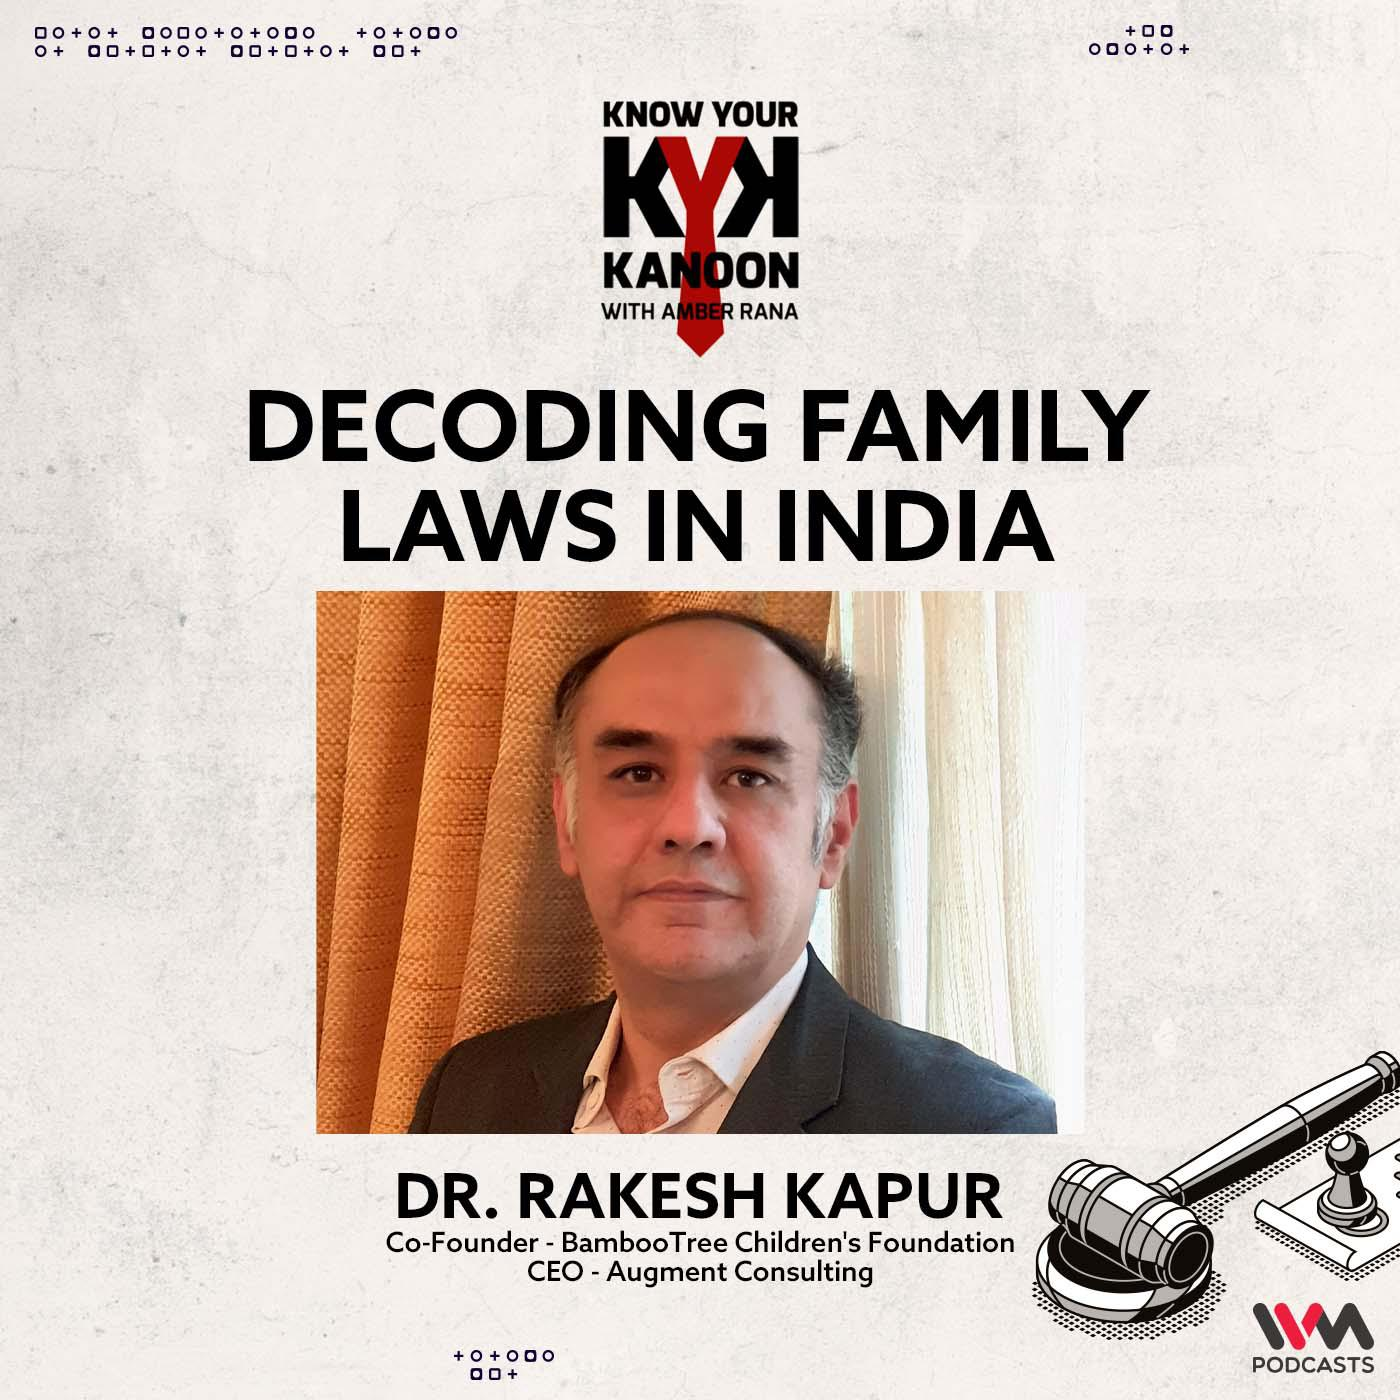 Dr. Rakesh Kapur decodes family laws in India